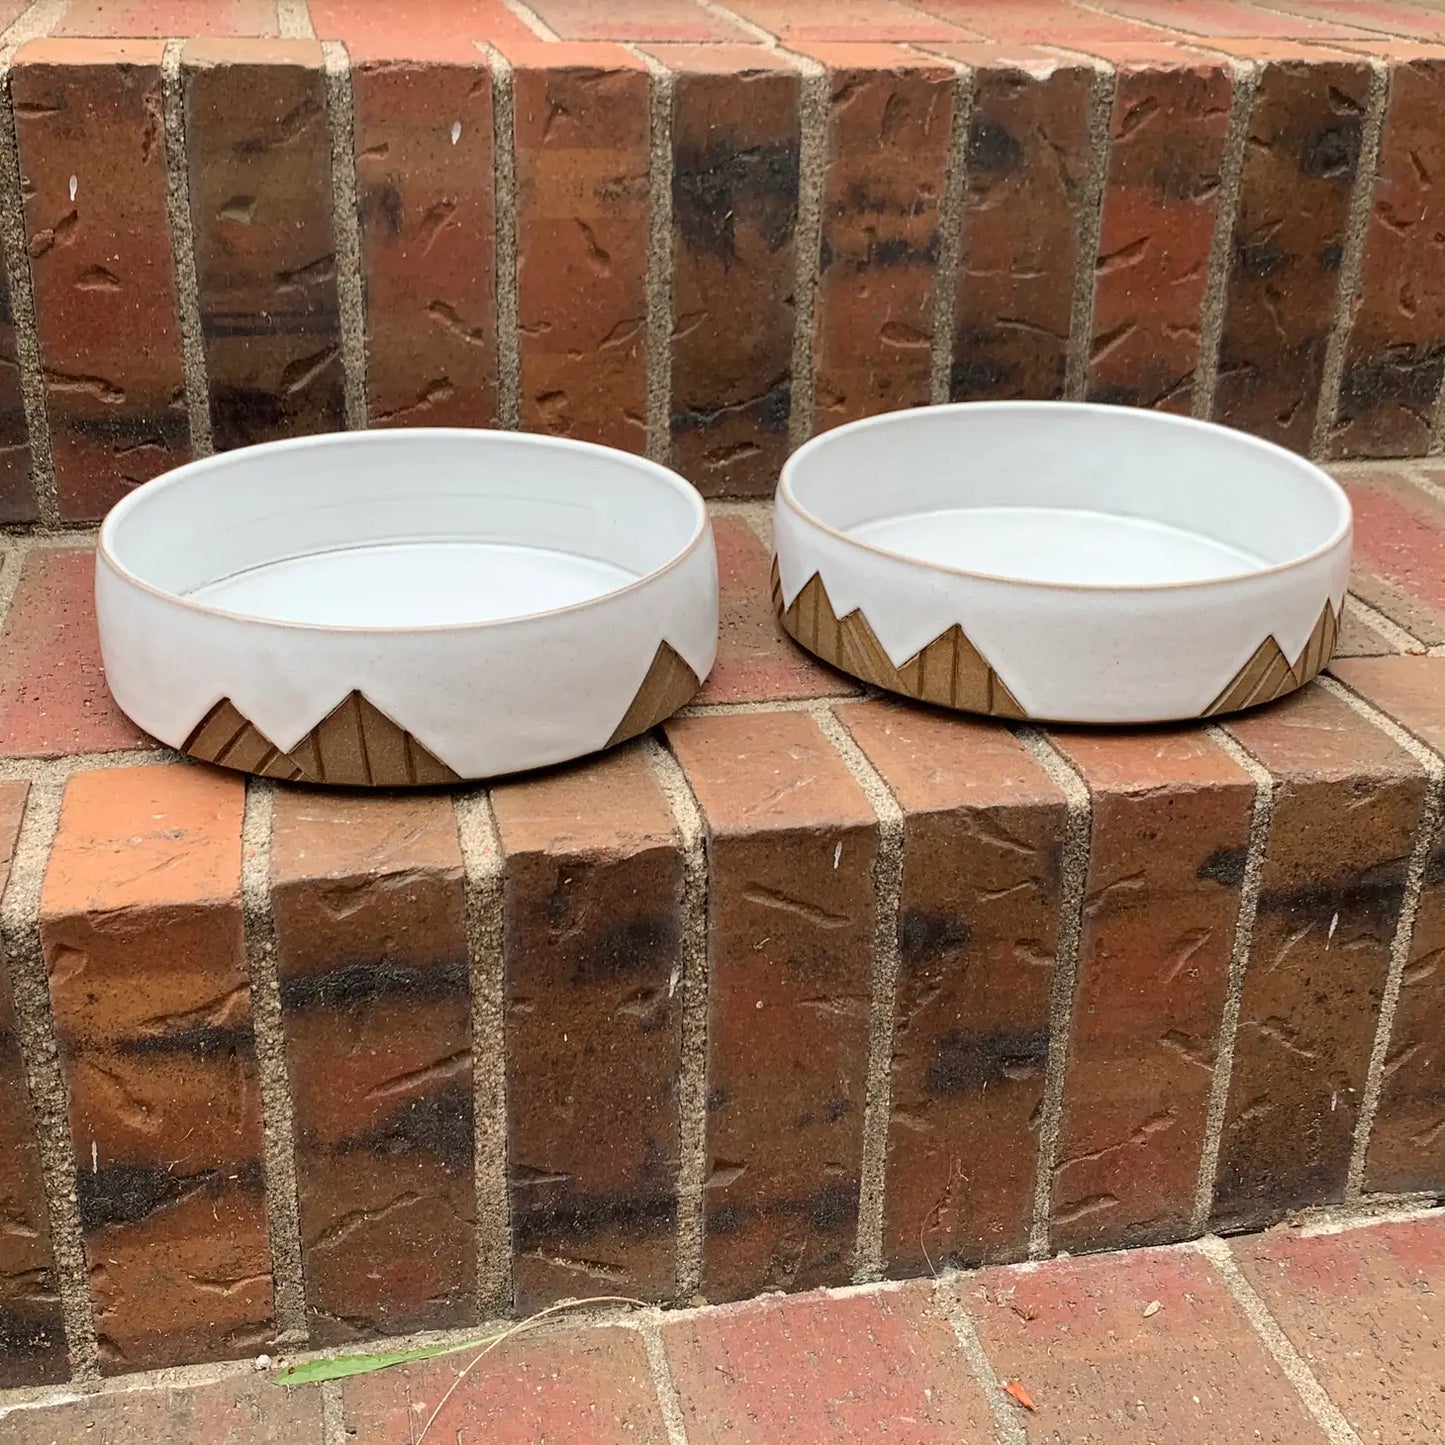 MOUNTAIN HOUND ceramic dog dish